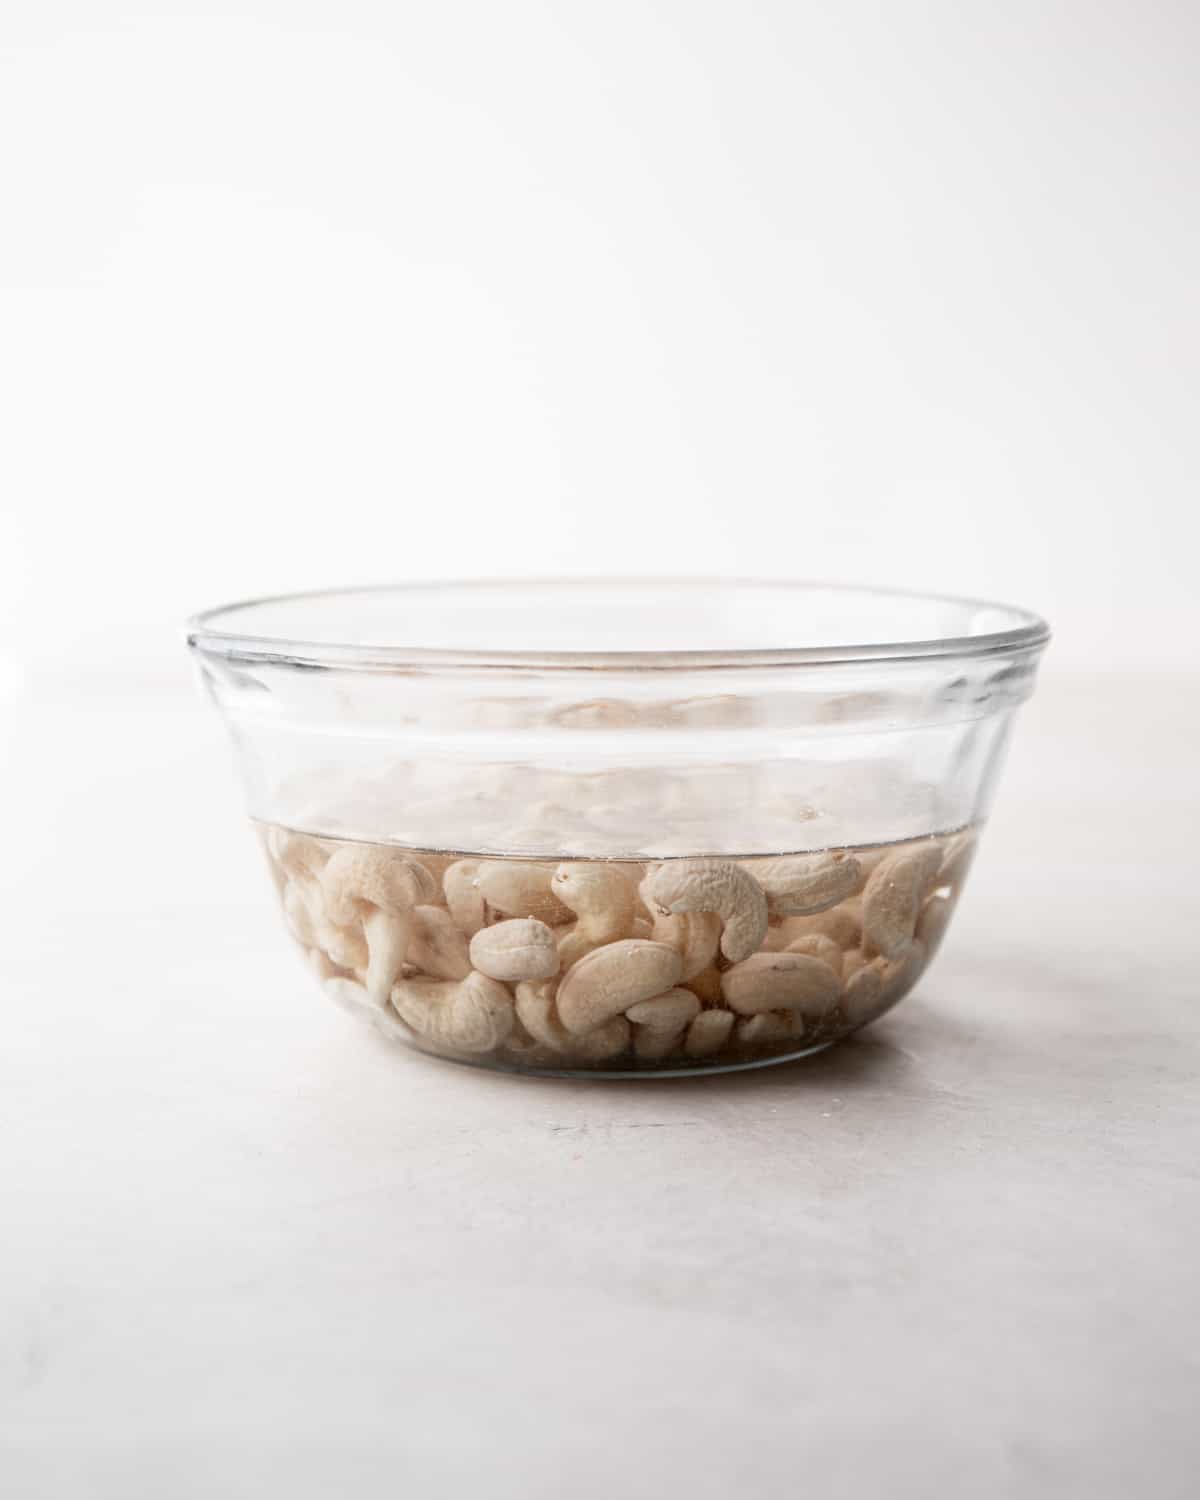 cashews soaking in a clear glass bowl